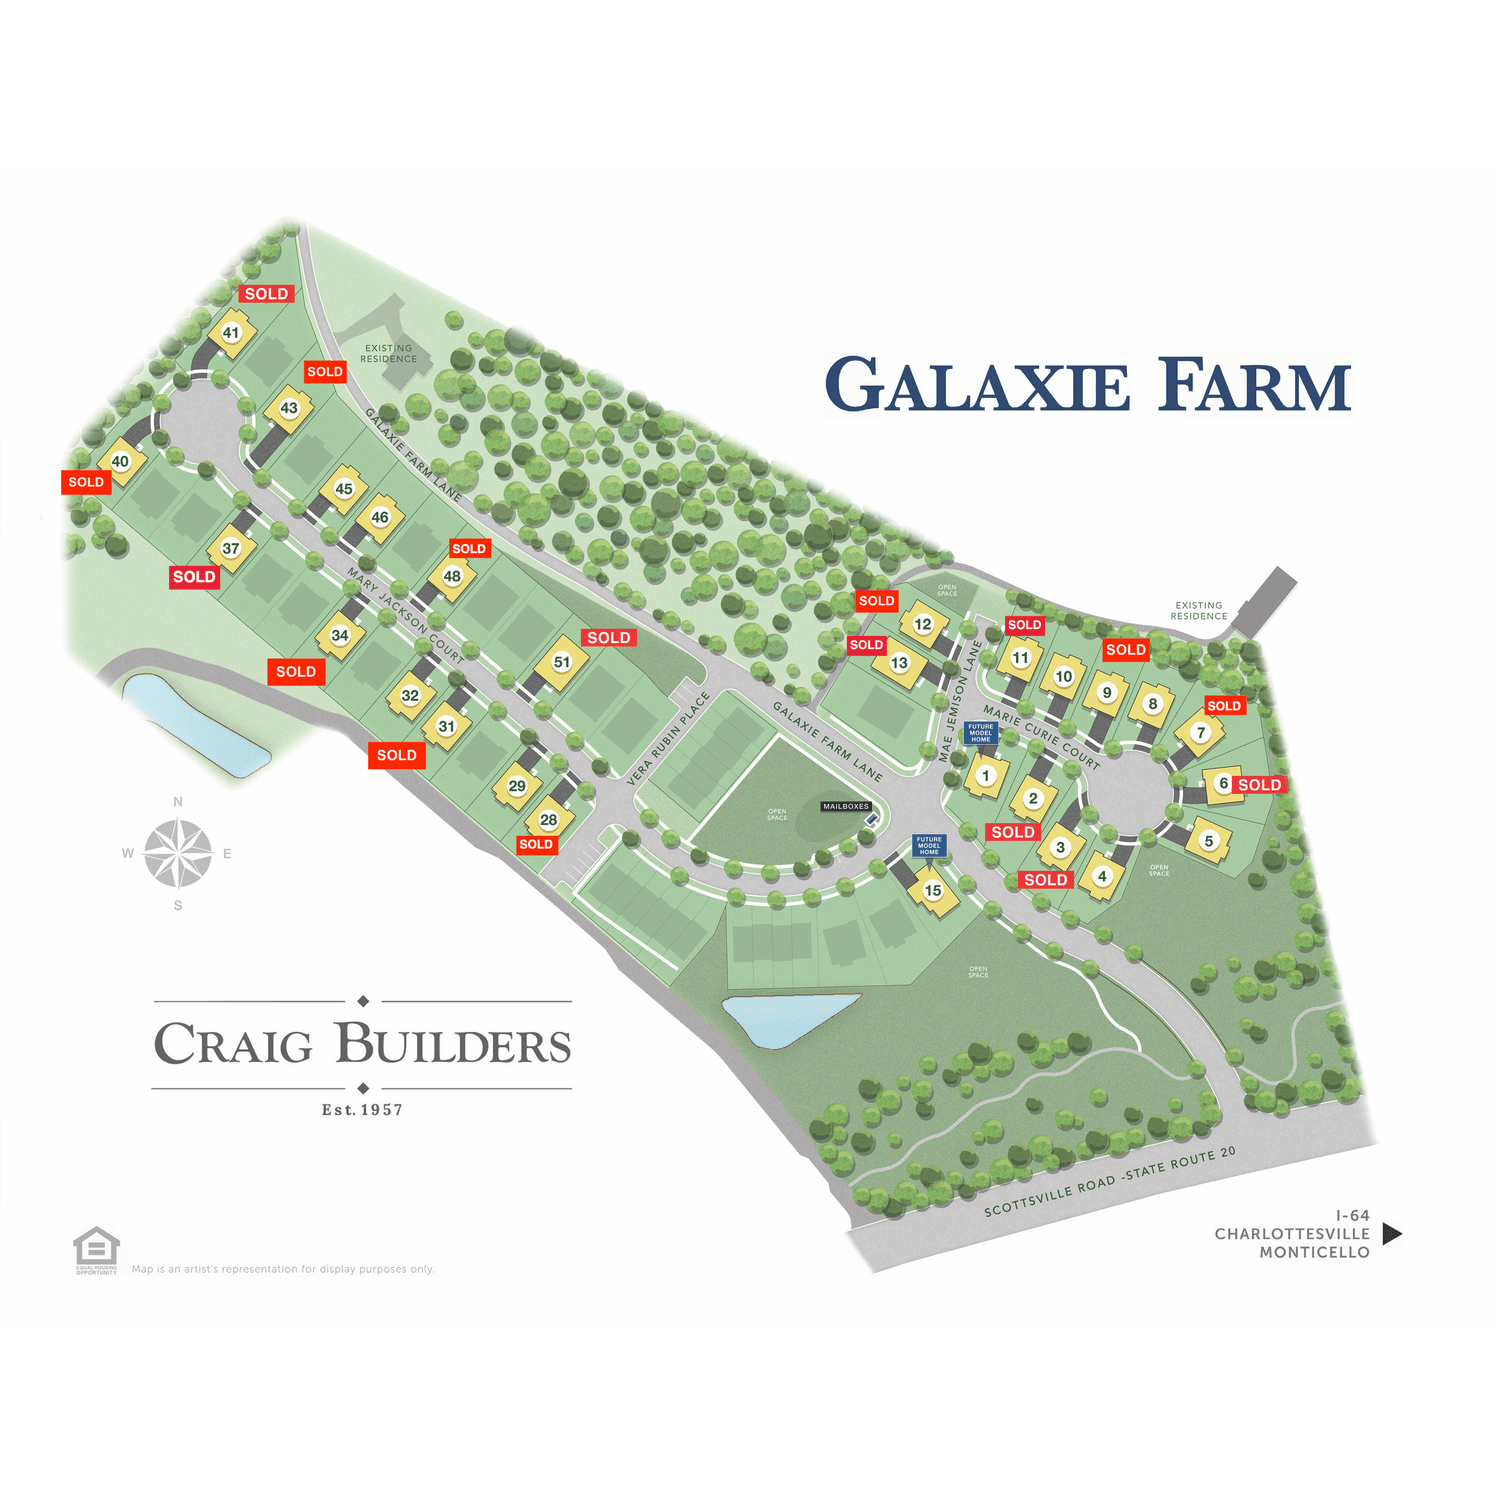 12. Galaxie Farm gebouw op 4006 Marie Curie Court, Charlottesville, VA 22902